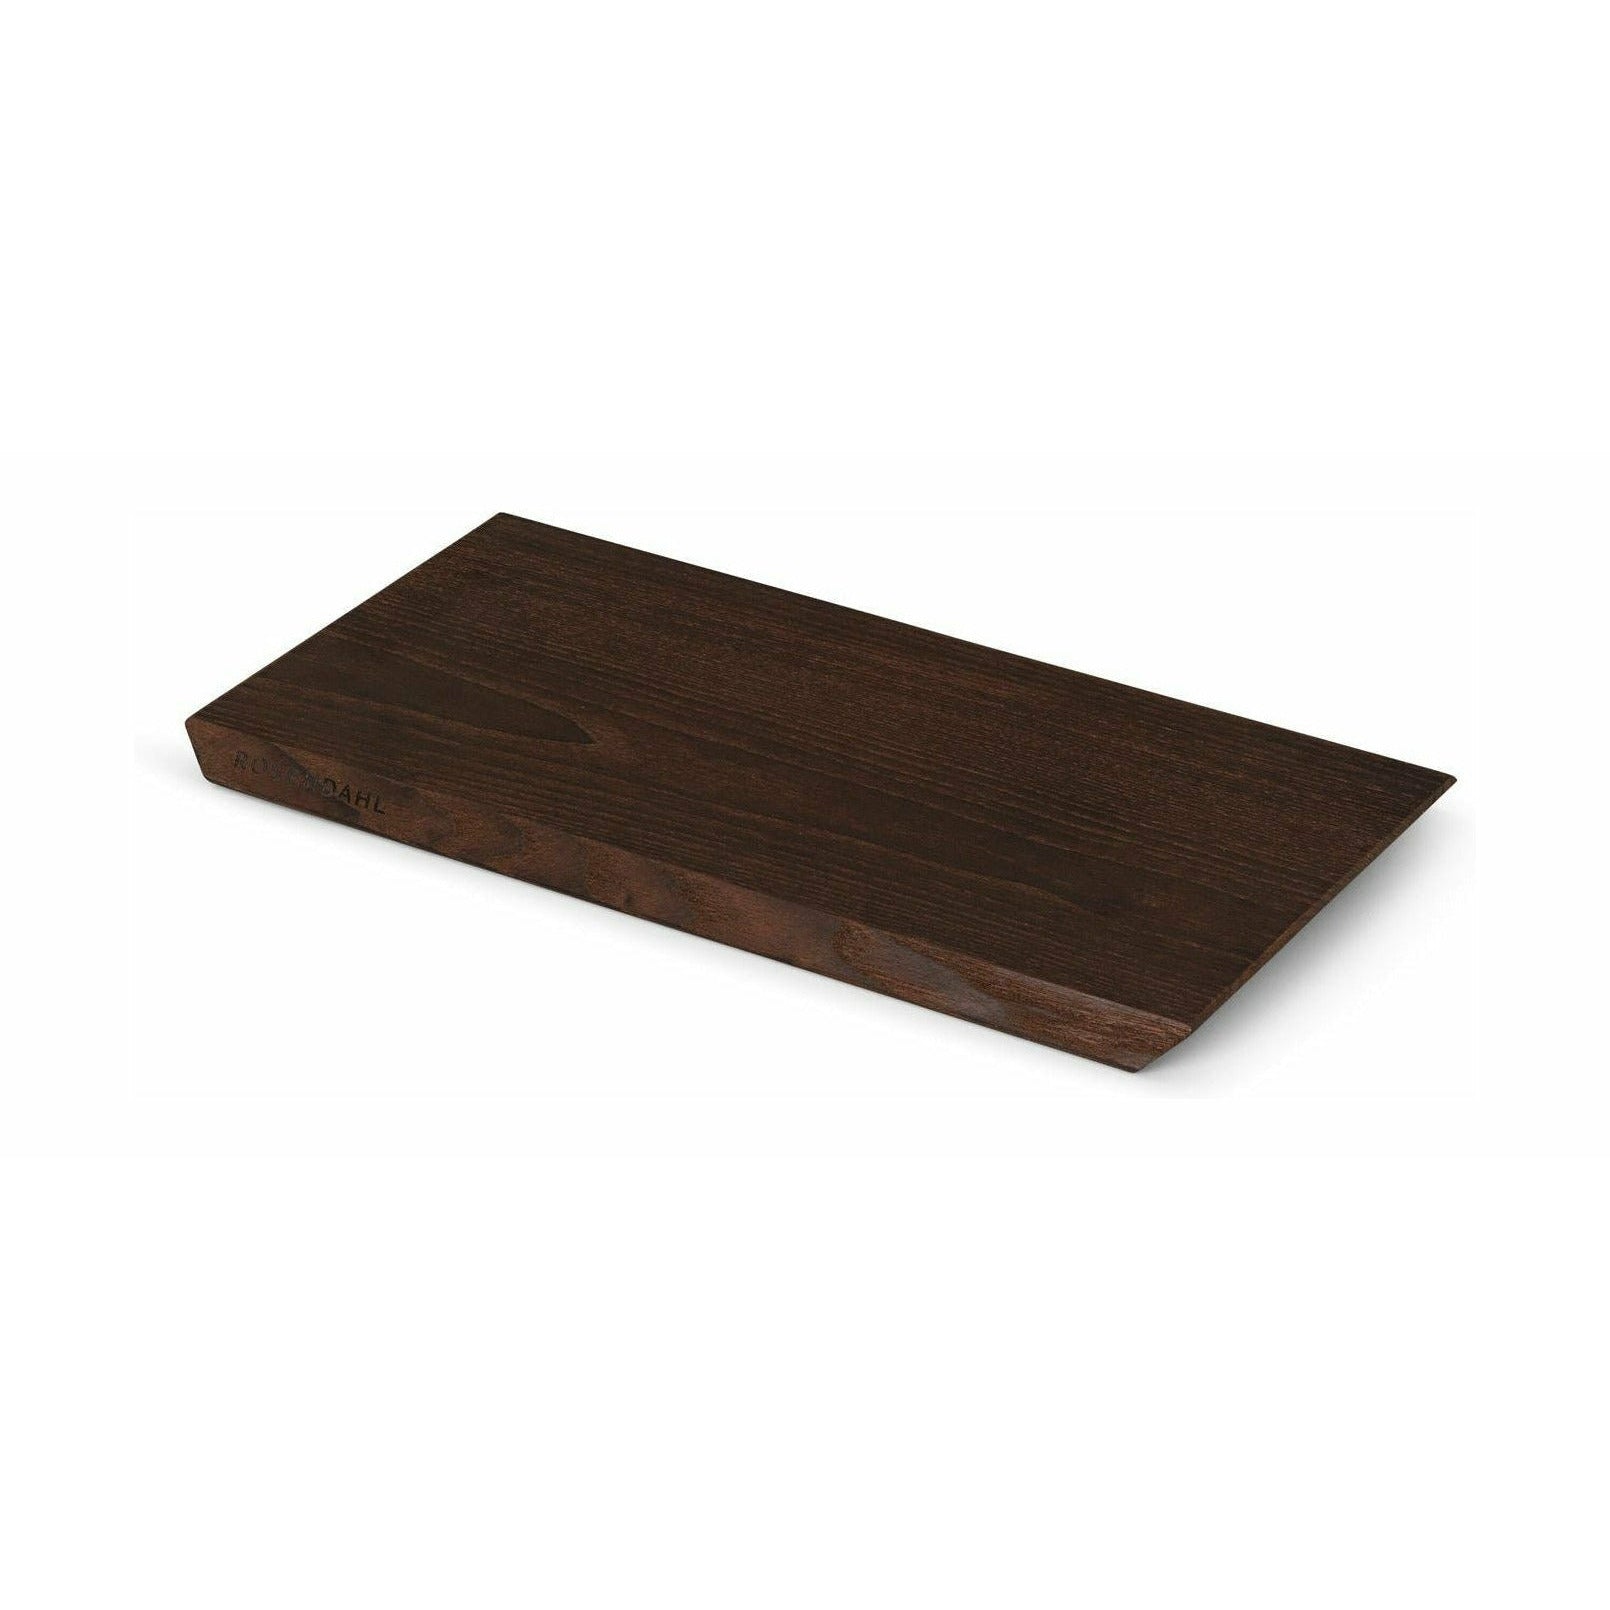 Rosendahl Rå Cutting Board Dąb naoliwiony, 17,5 x 31 cm